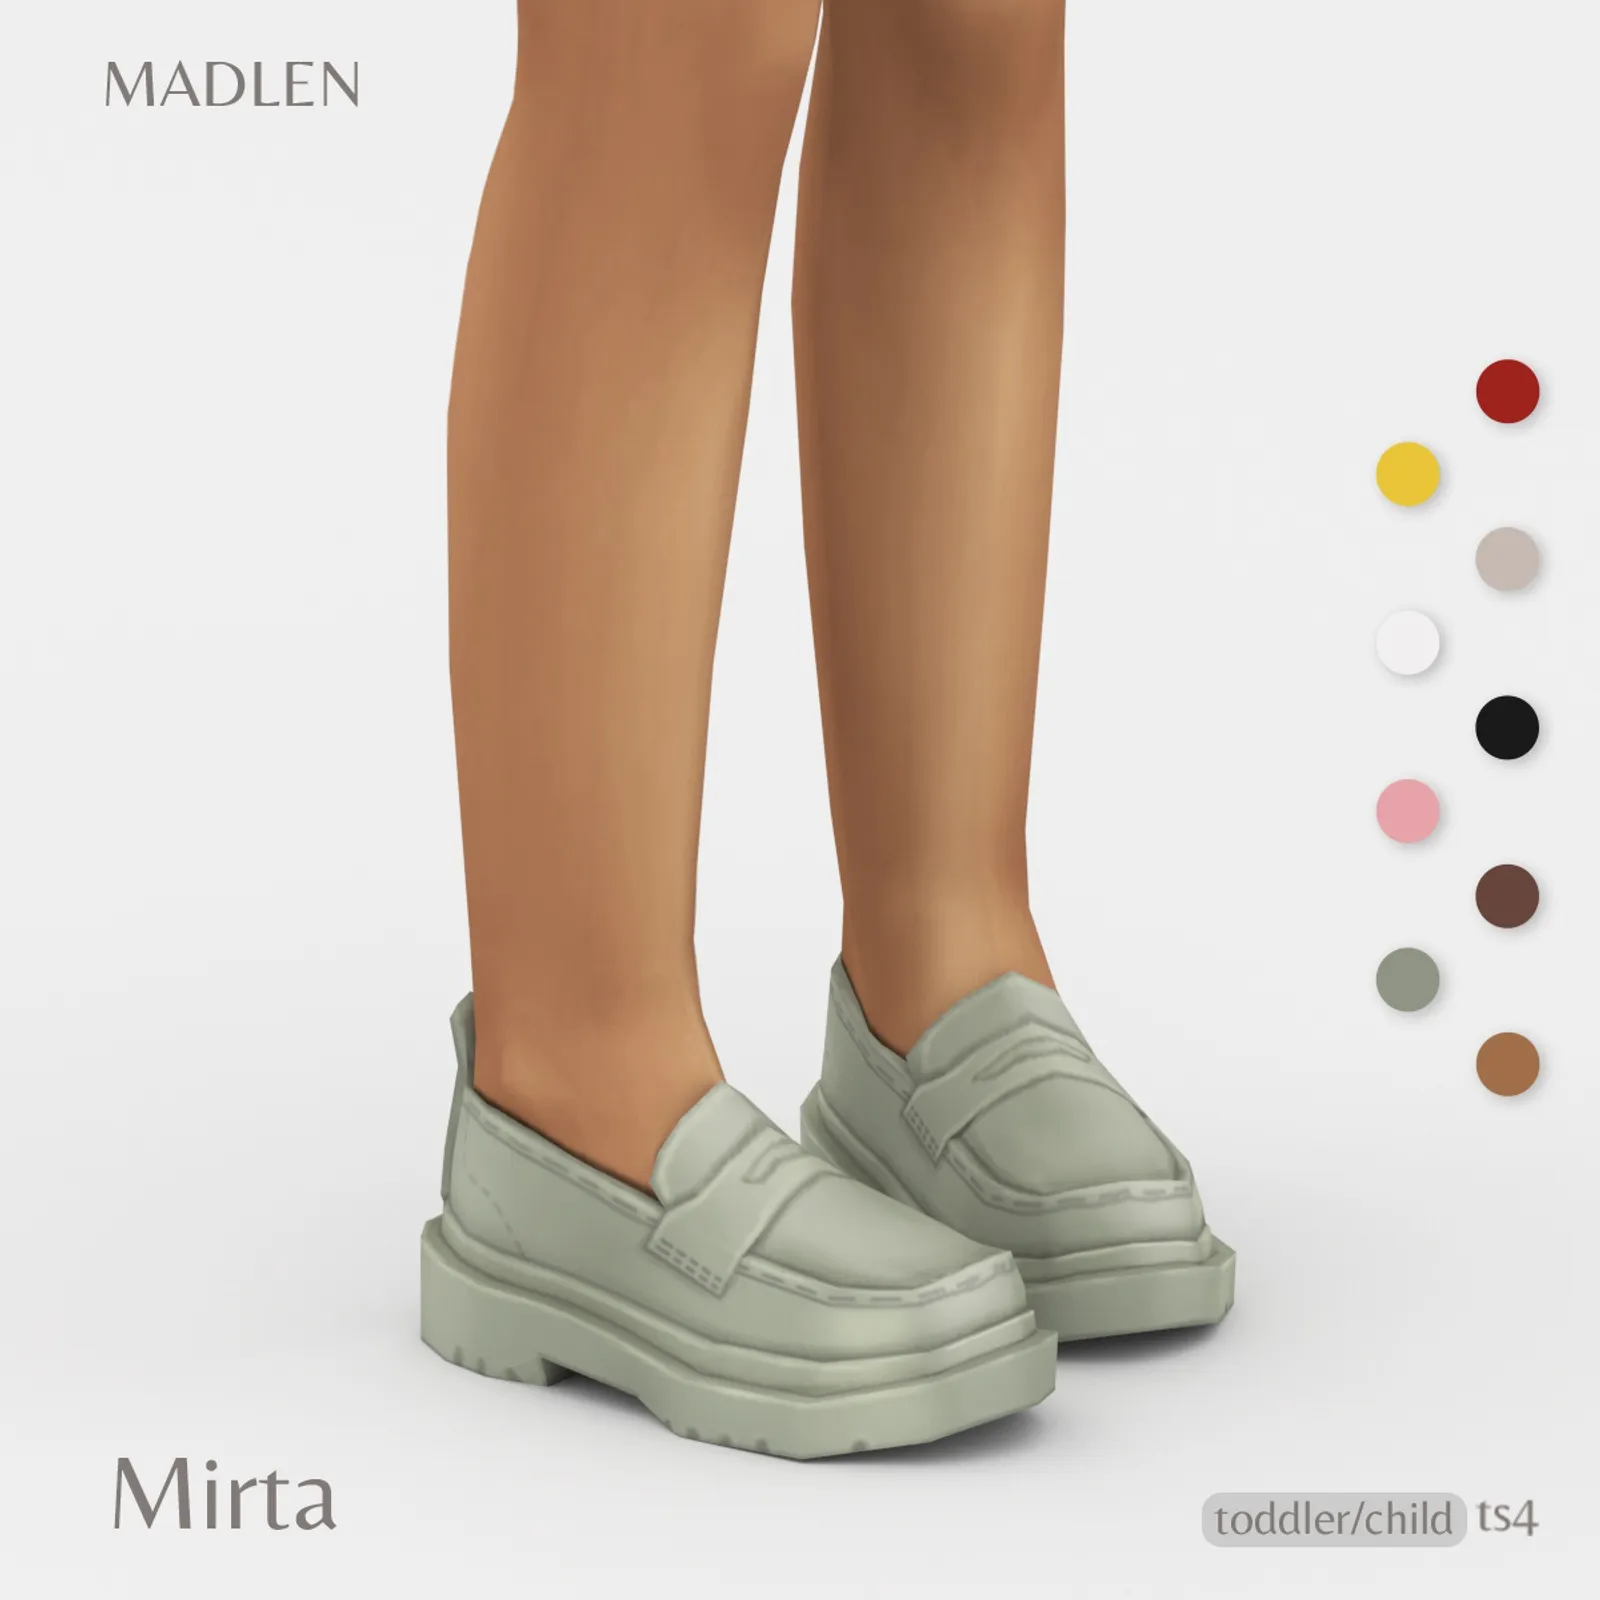 Mirta Shoes